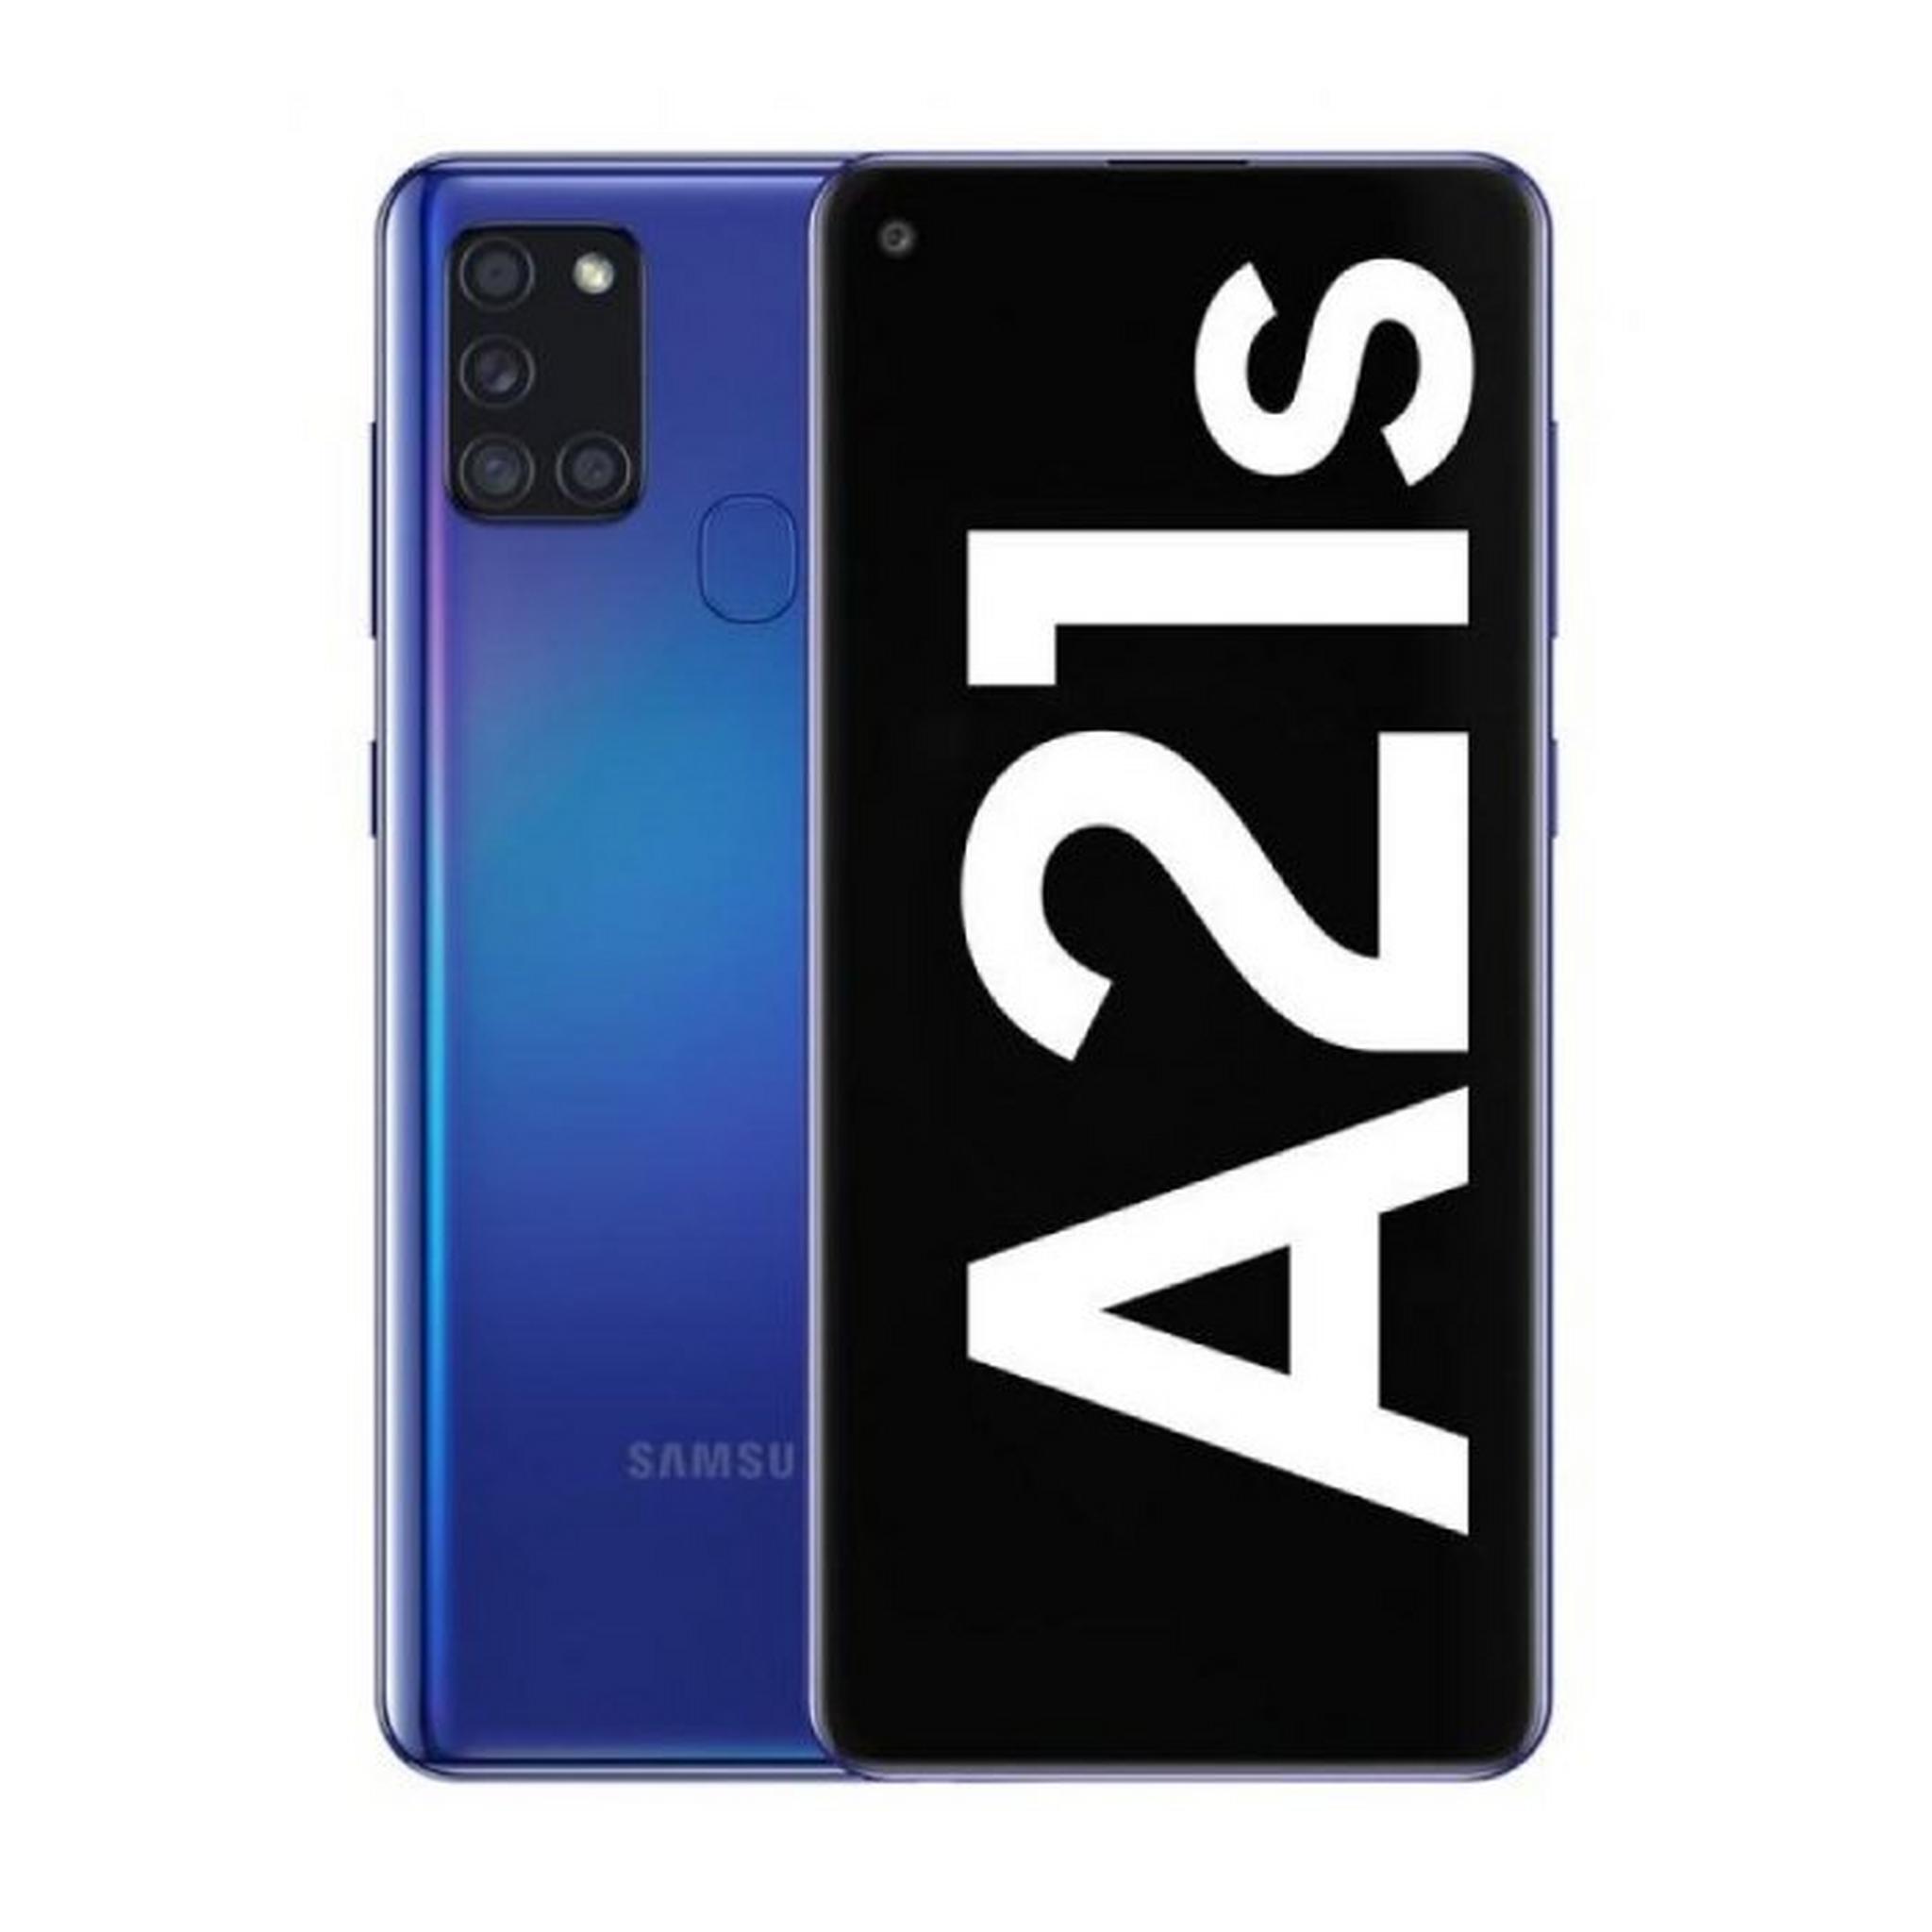 هاتف سامسونج جالاكسي A21s بسعة 64 جيجابايت  - أزرق